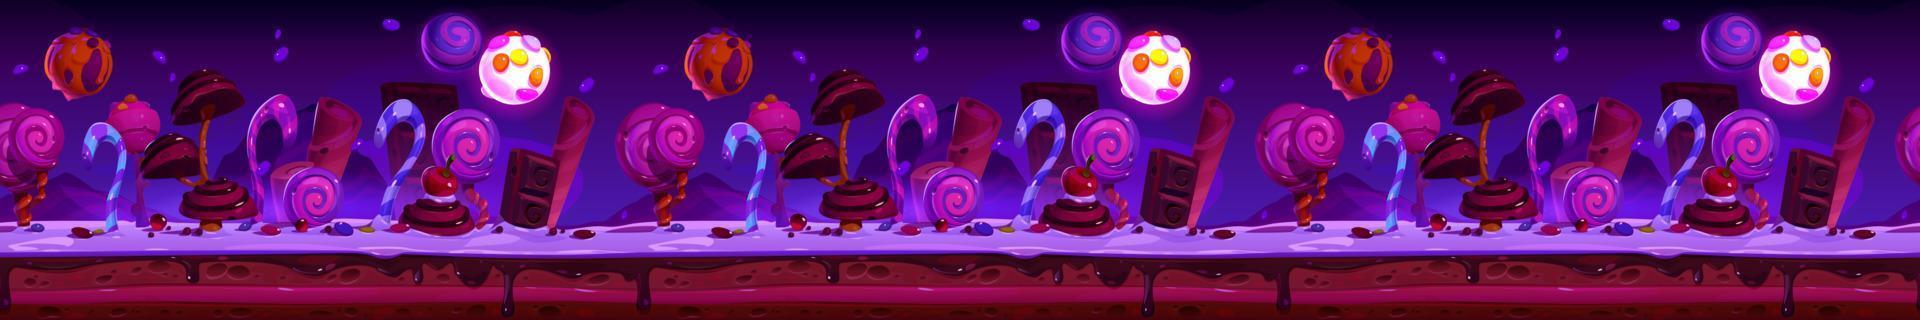 Candy planet night landscape cartoon game platform vector